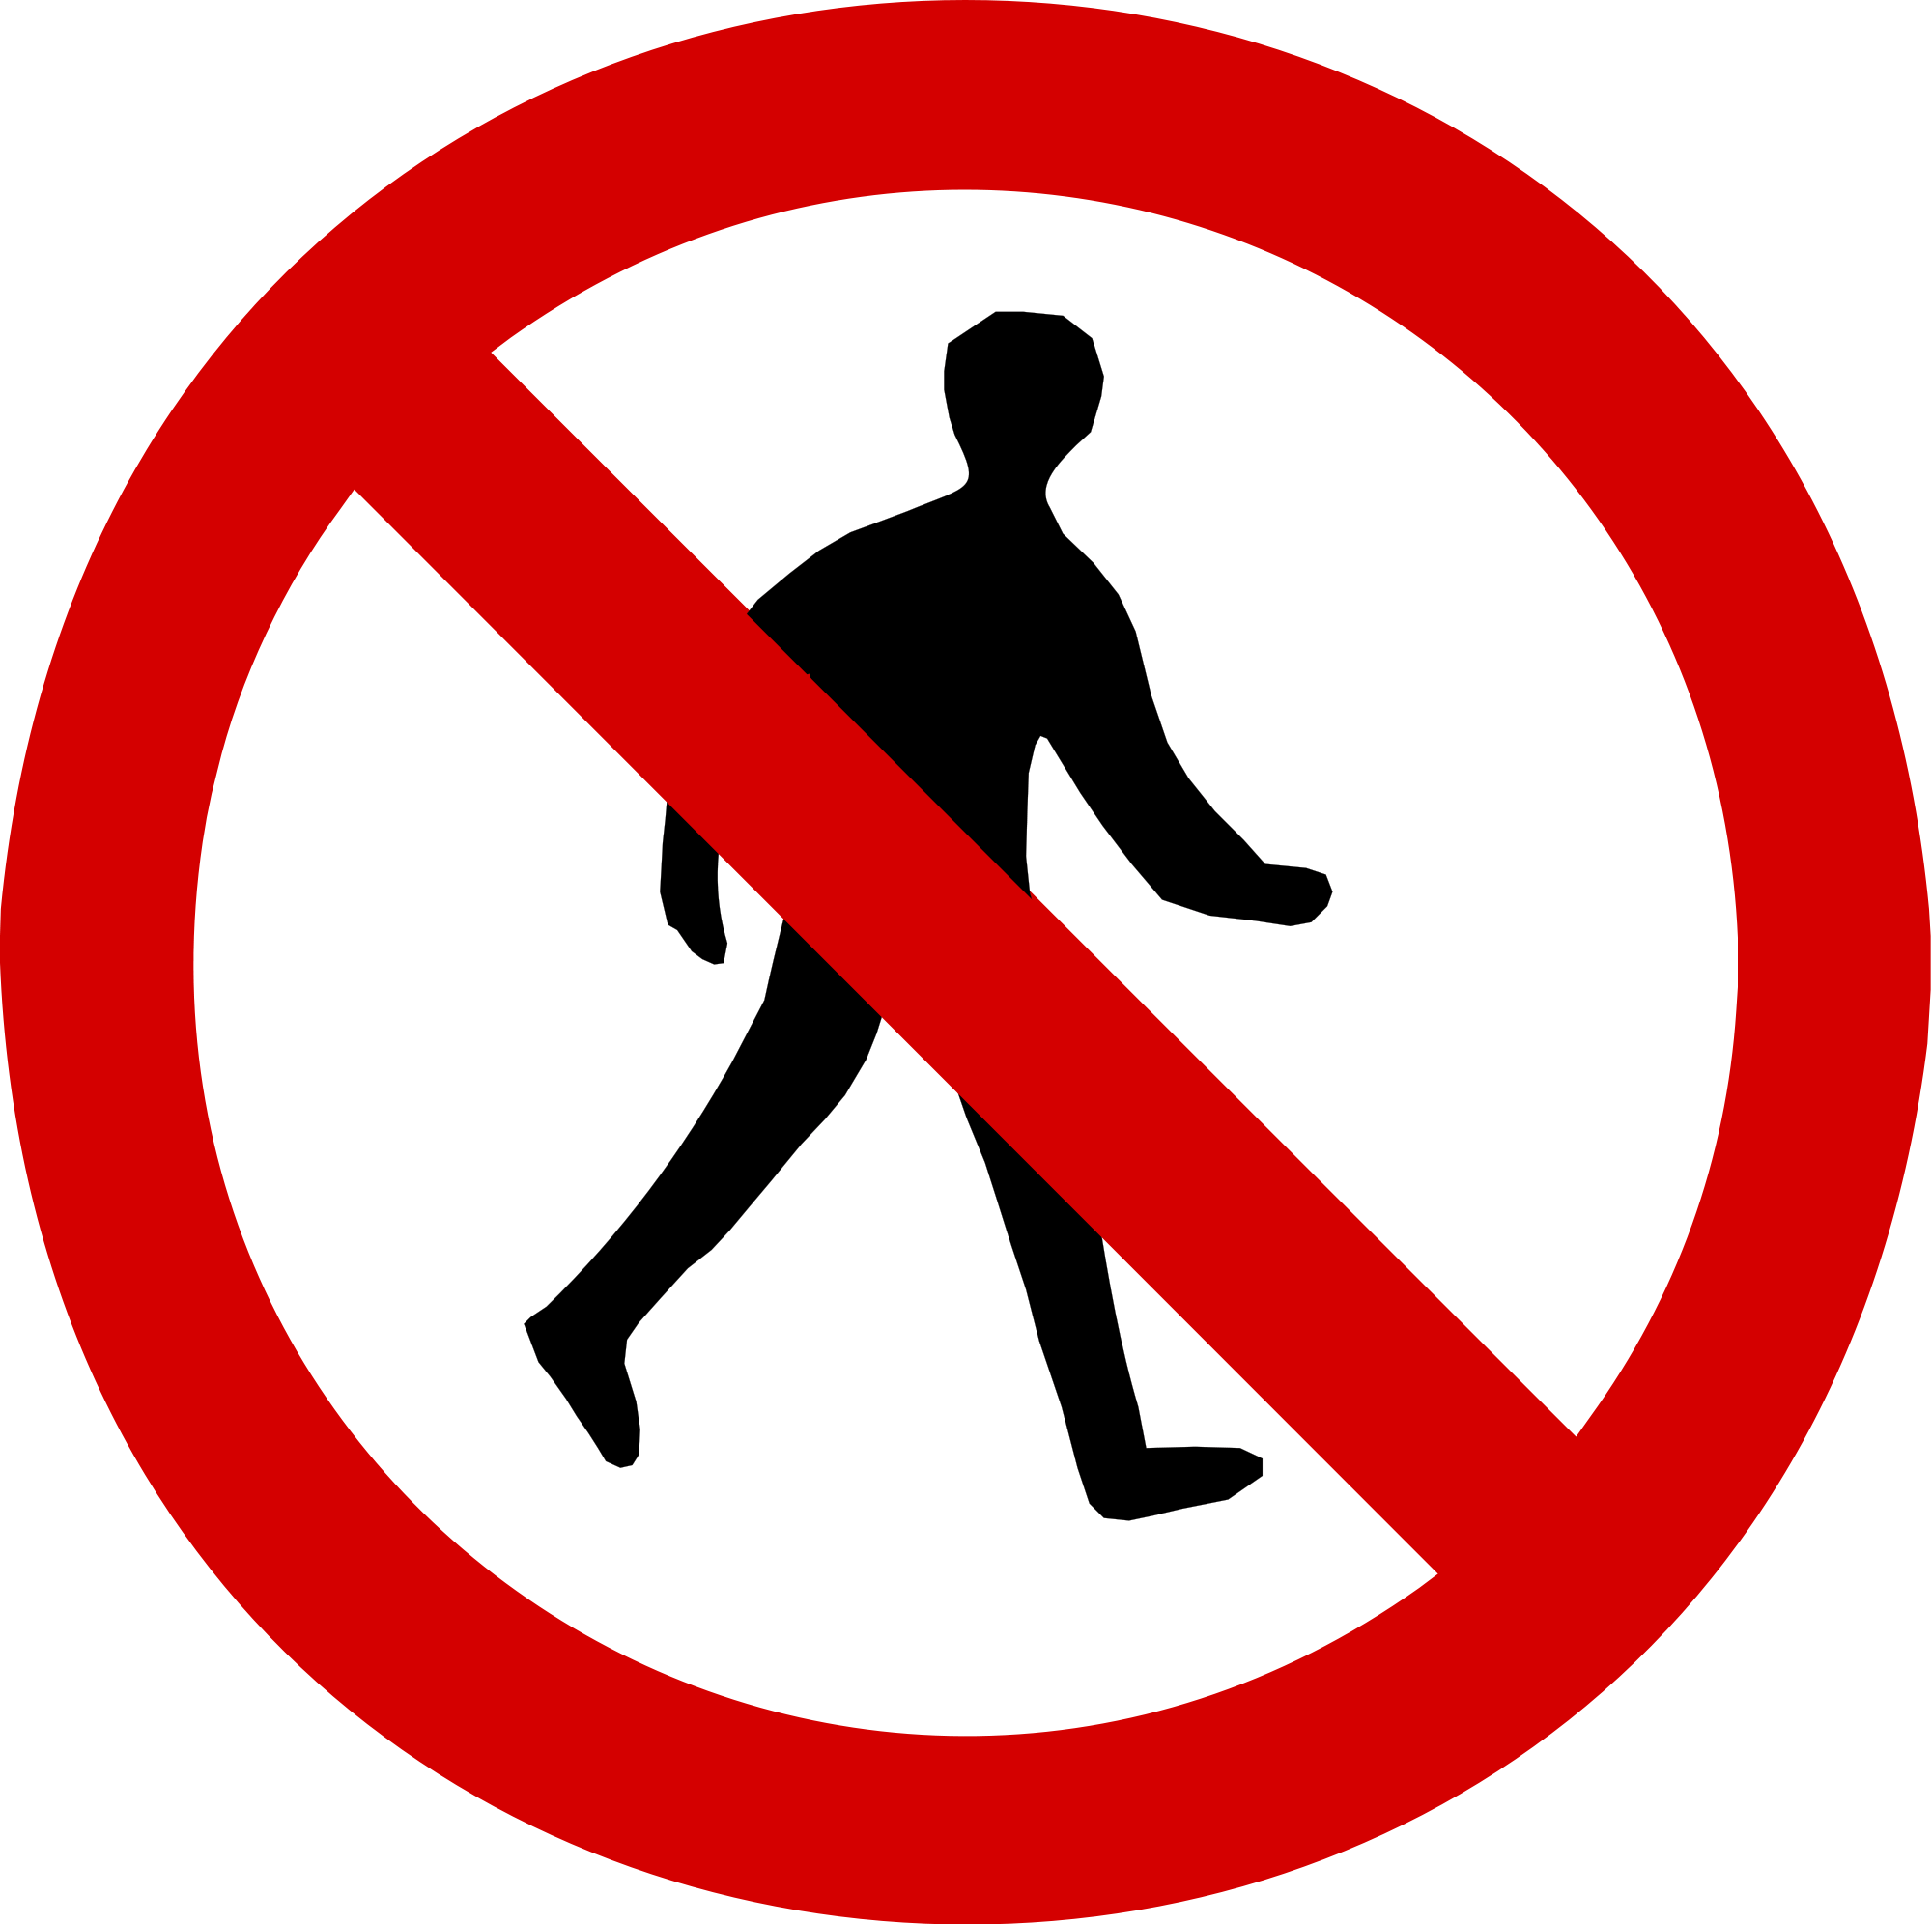 File:Regulatory road sign no entry for pedestrians.svg - Wikimedia ...